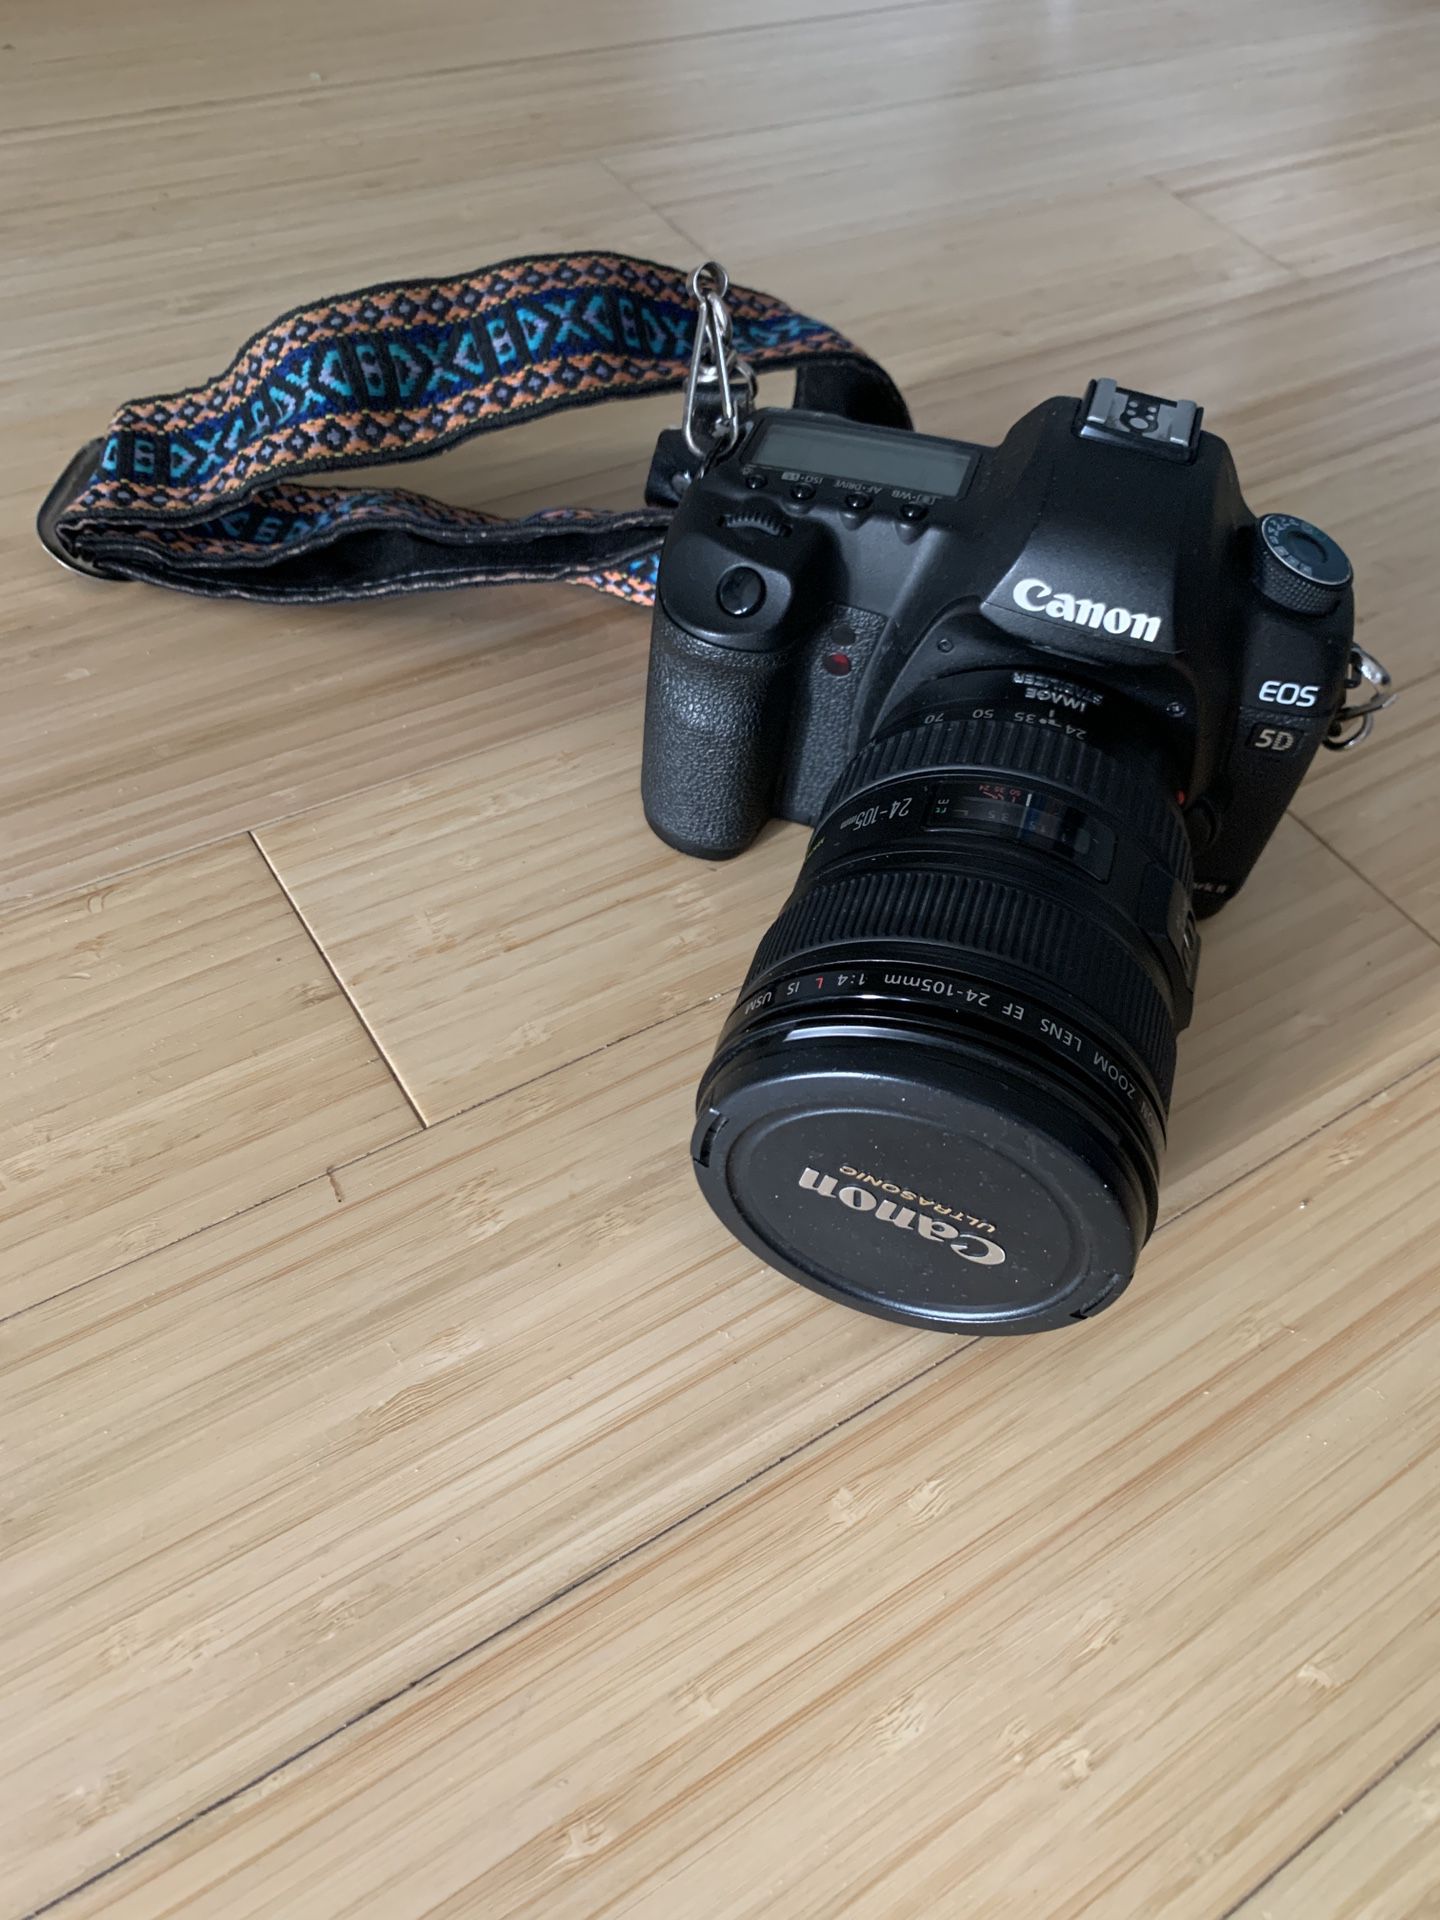 Canon EOS 5D mark II digital SLR camera with 24-105mm lens